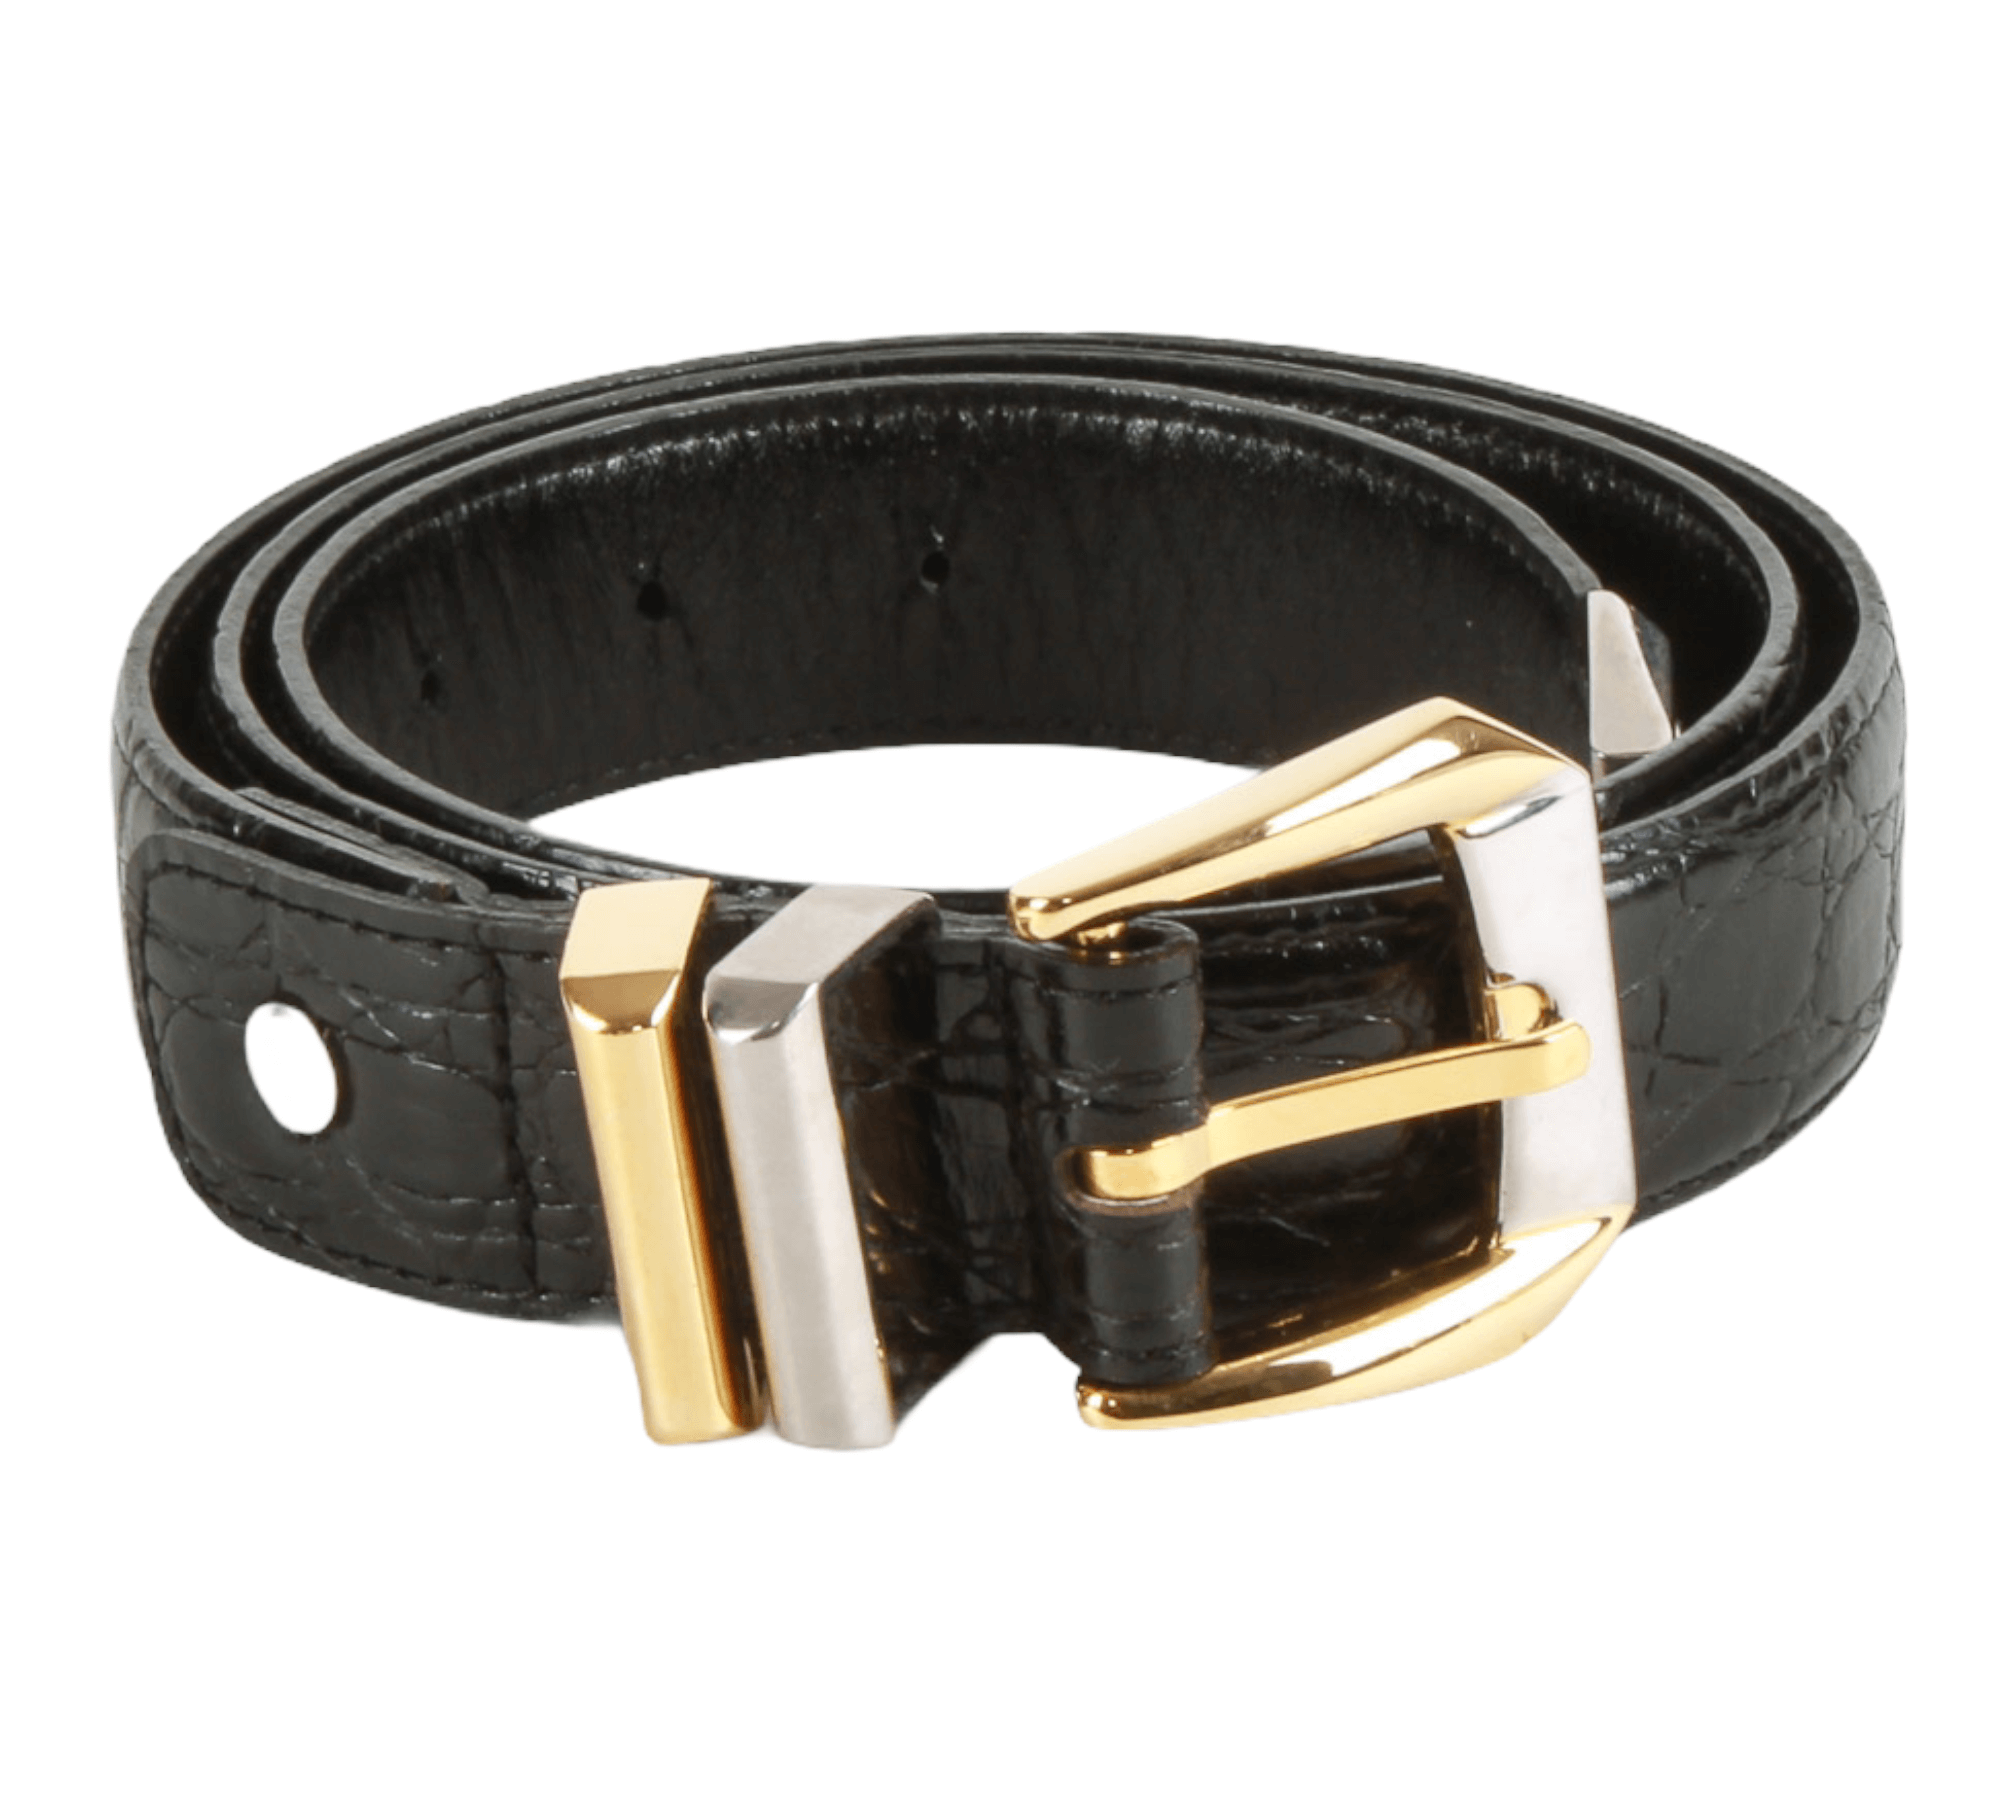 Leather belt Versace Black size Not specified International in